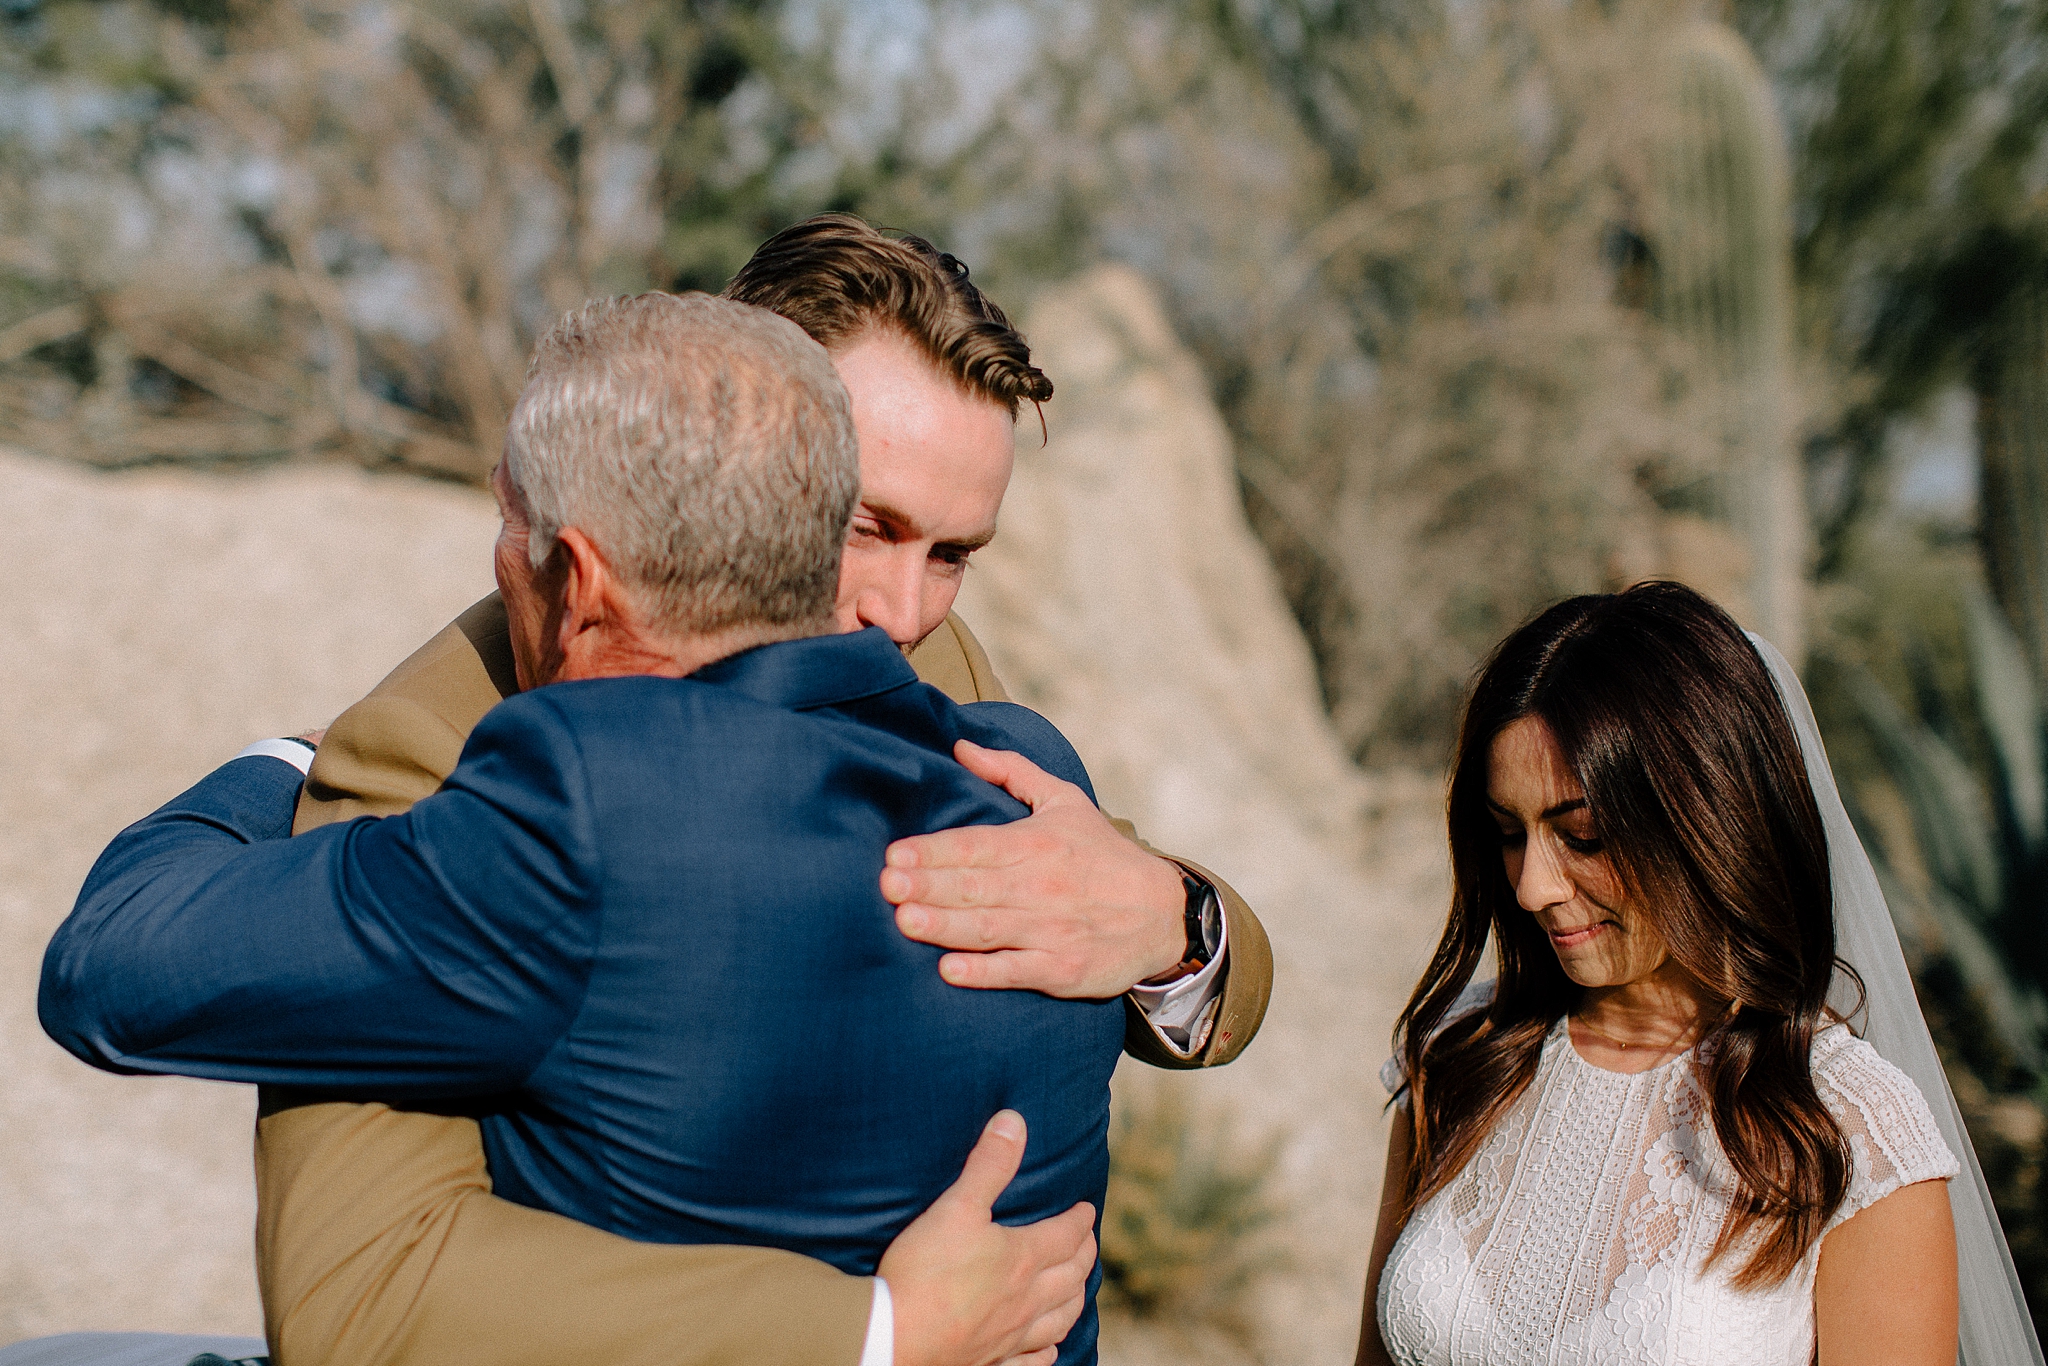 Scottsdale Wedding Photographer, Phoenix Wedding Photographer, Aaron Hoskins Photography, The Boulders Resort Wedding, Bride, Groom, Ceremony